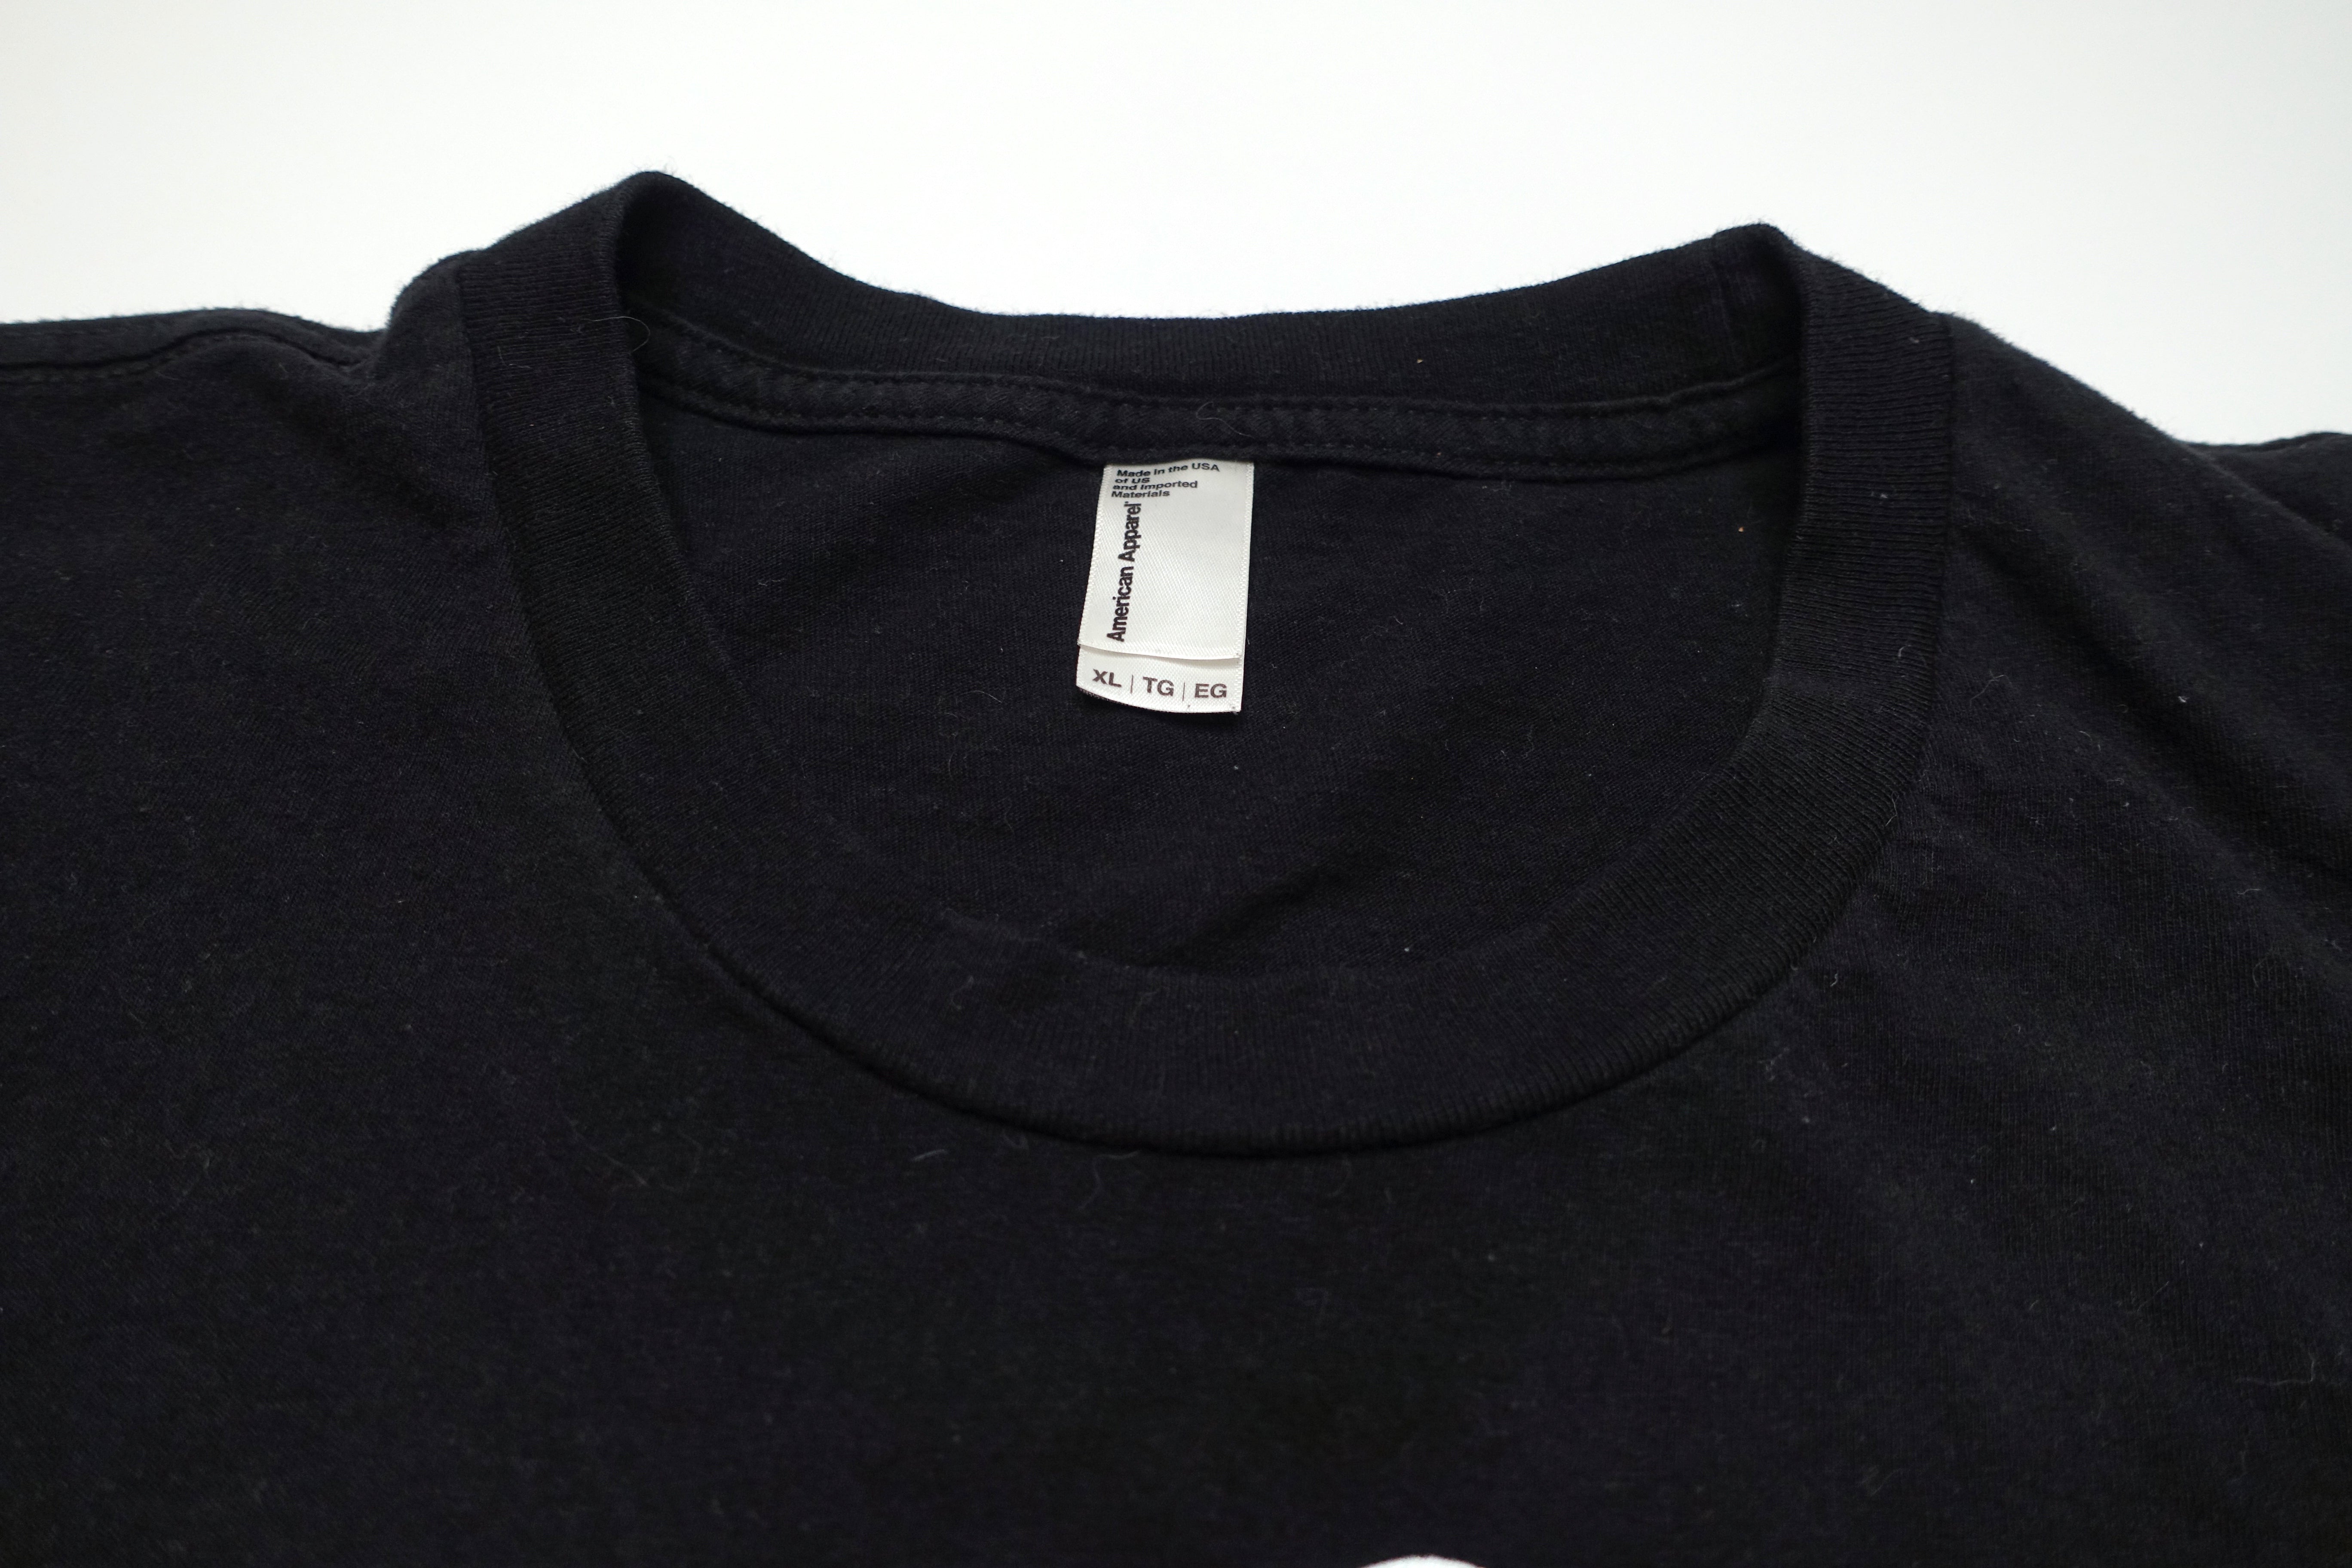 Alternative Tentacles ‎– Winston Smith Bat Logo 00's Shirt Size XL